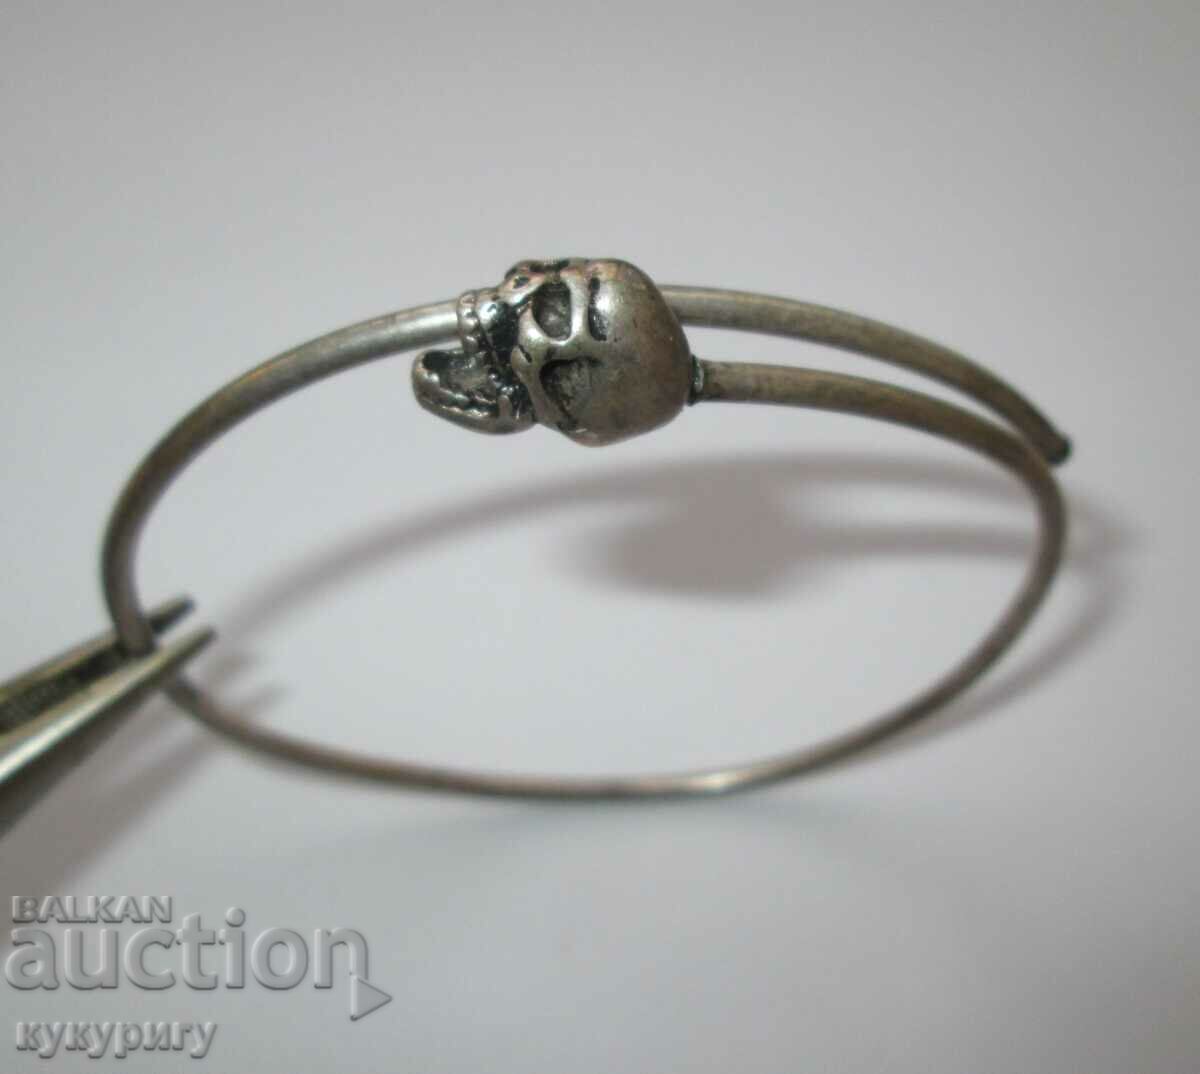 Old round skull bracelet